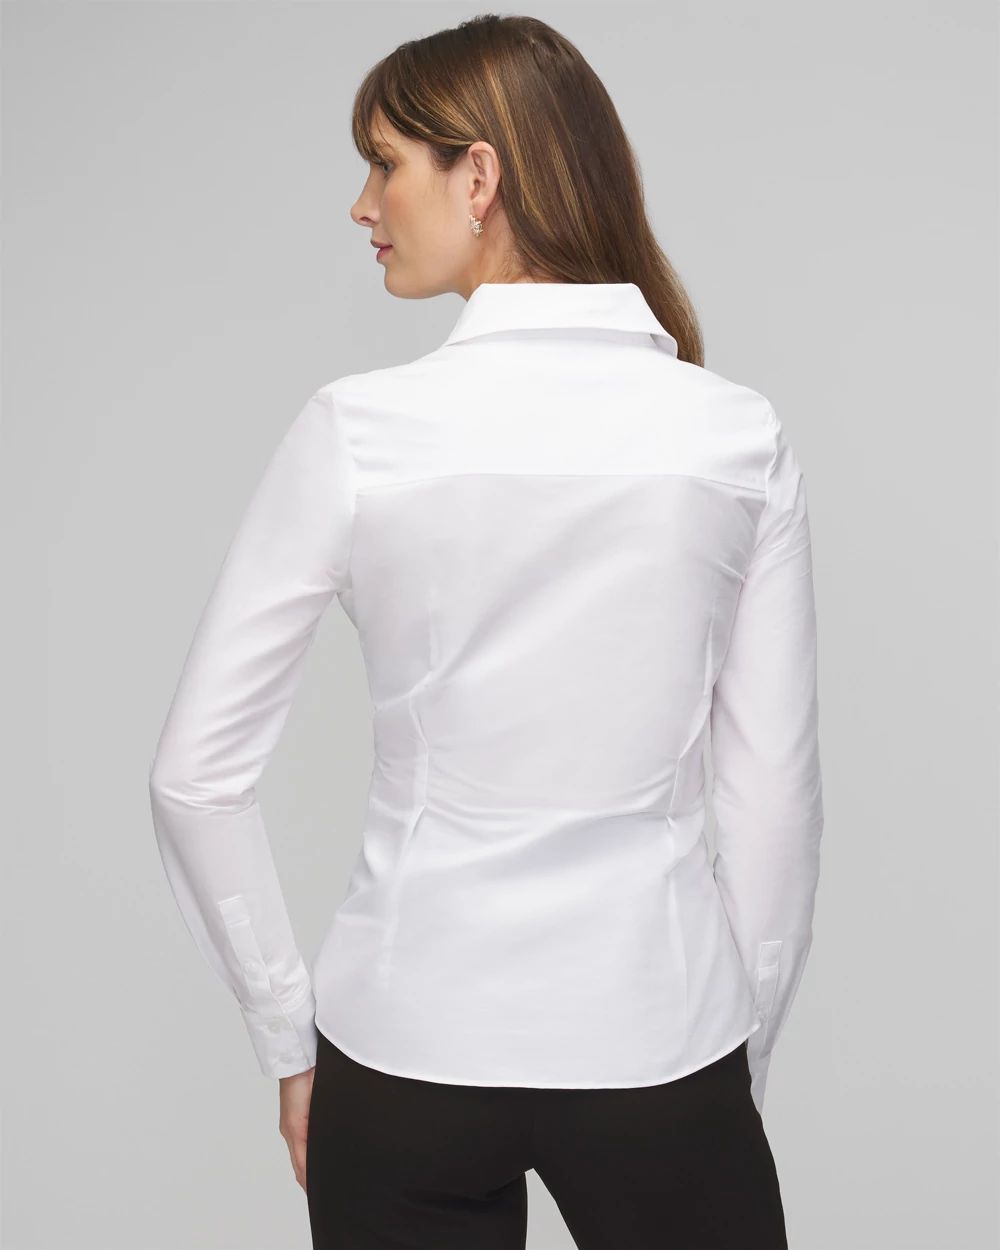 Petite Long Sleeve Poplin Wrap Shirt click to view larger image.